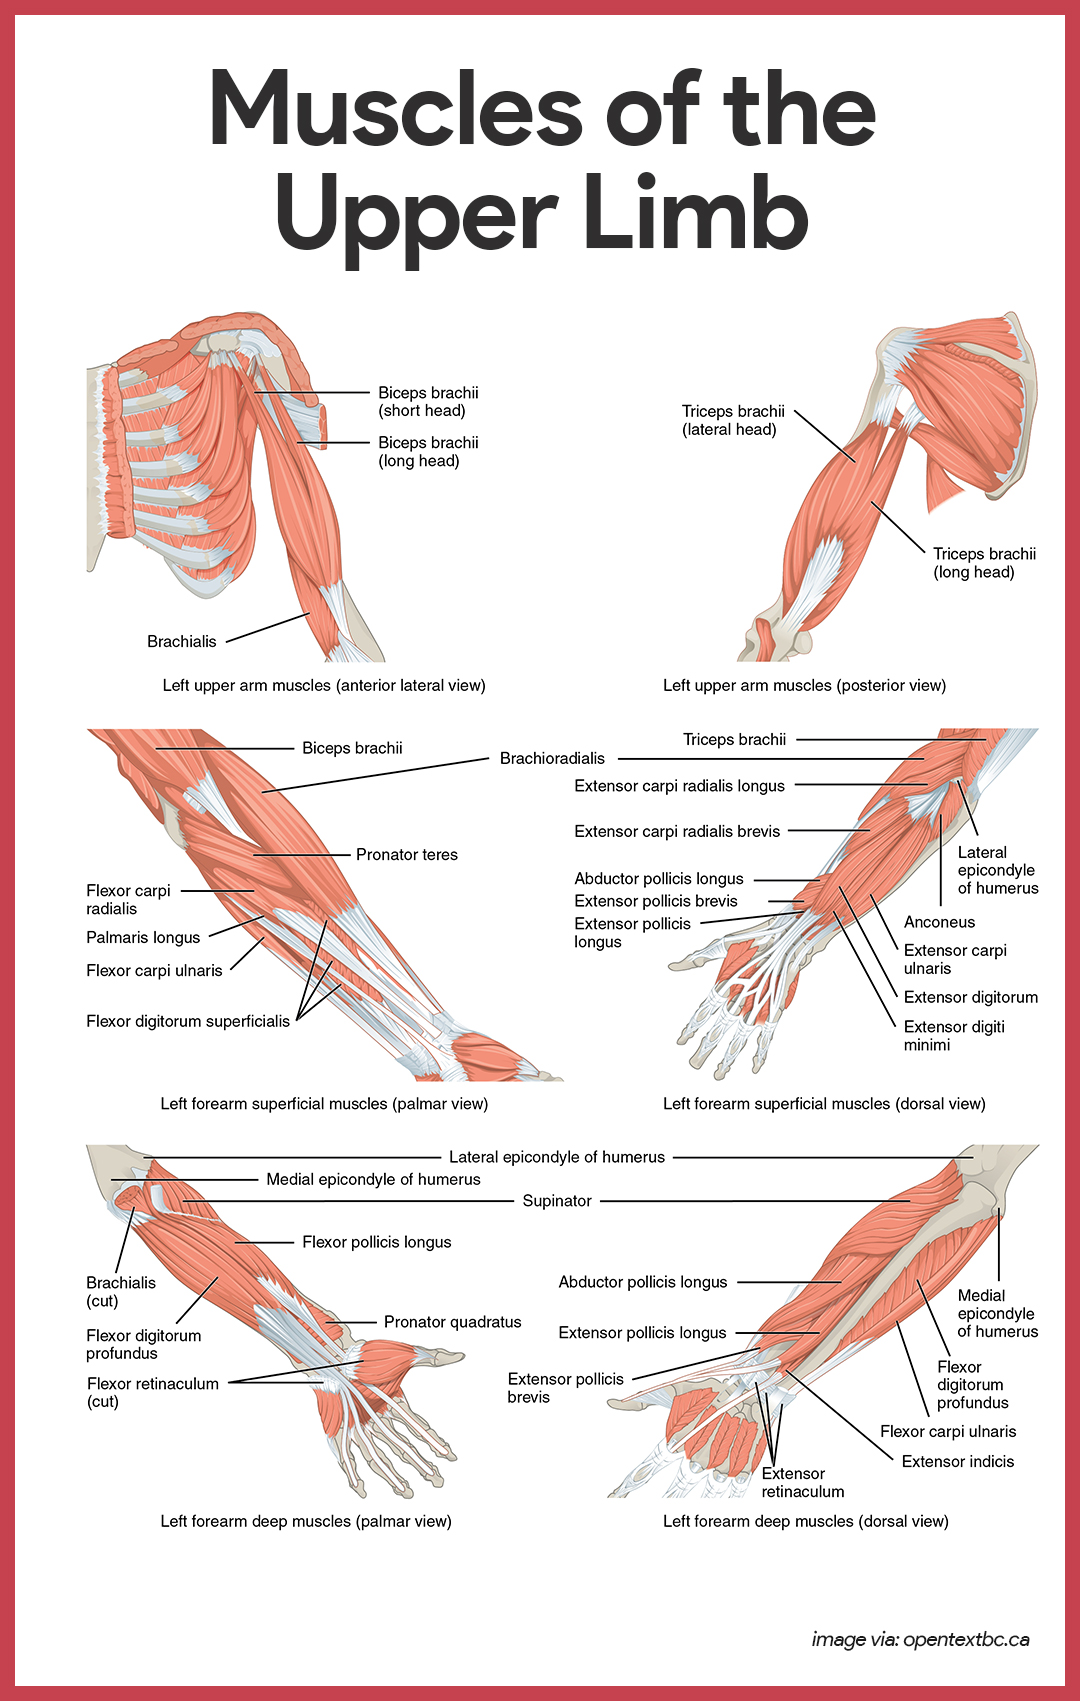 Muscles-of-the-Upper-Limb-Muscular-System.jpg